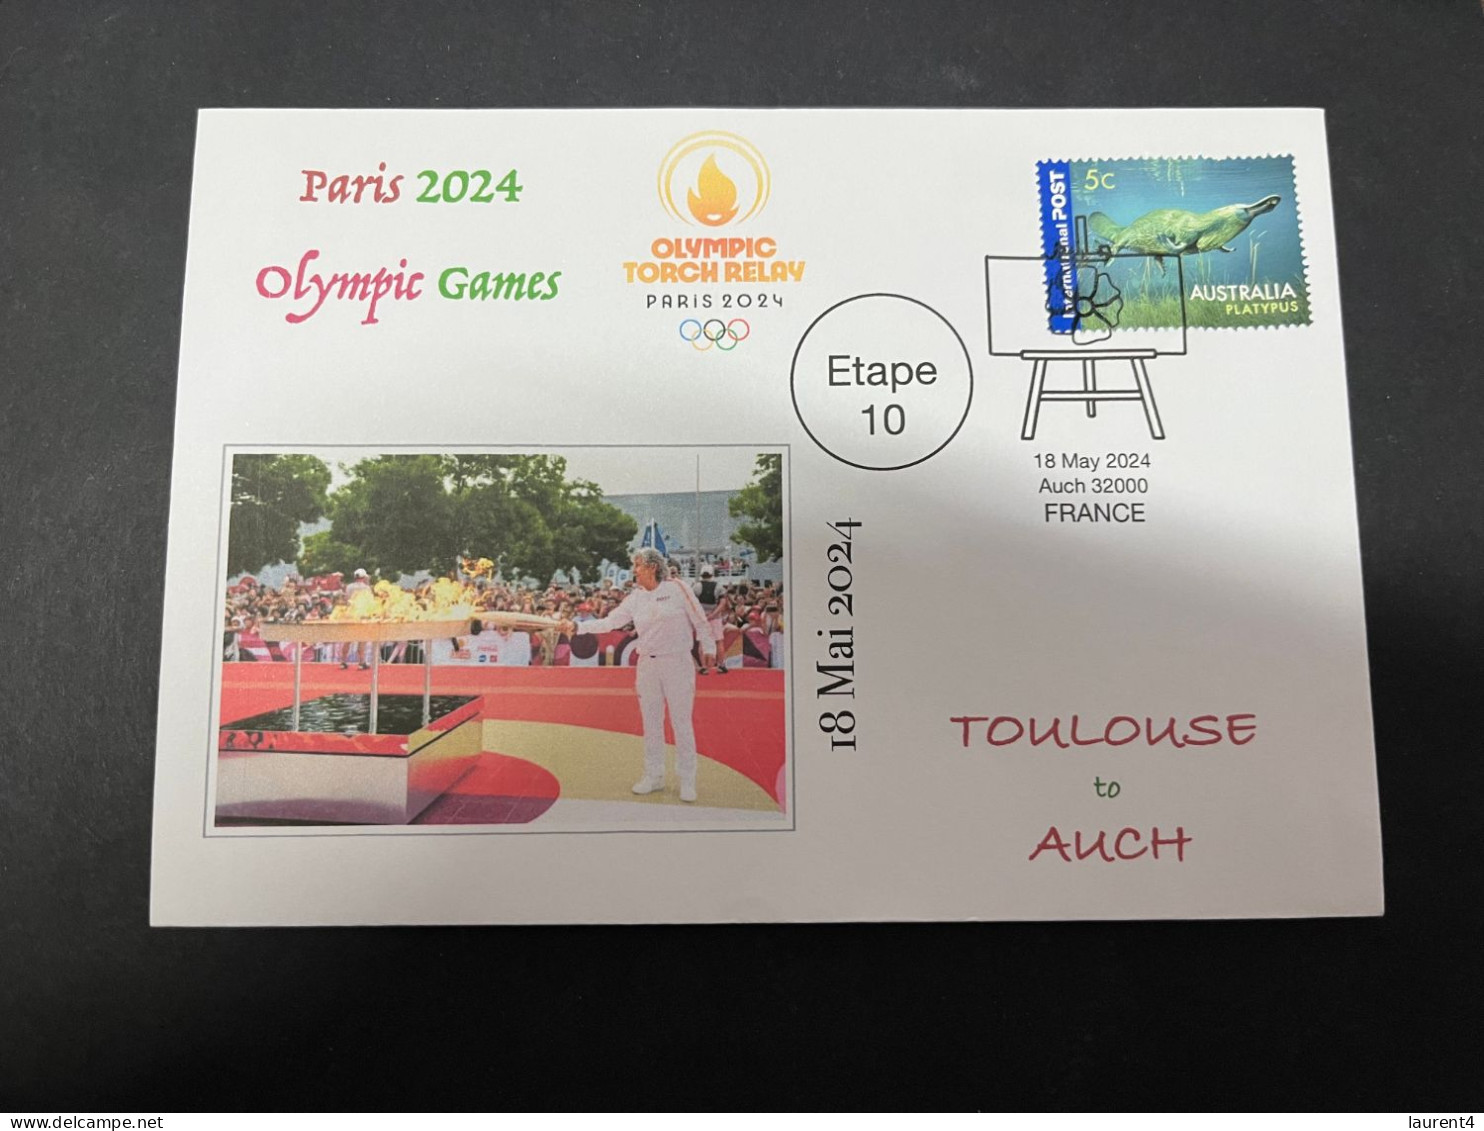 19-5-2024 (5 Z 27) Paris Olympic Games 2024 - Torch Relay (Etape 10) In Auch (18-5-2024) With Platypus Stamp - Eté 2024 : Paris